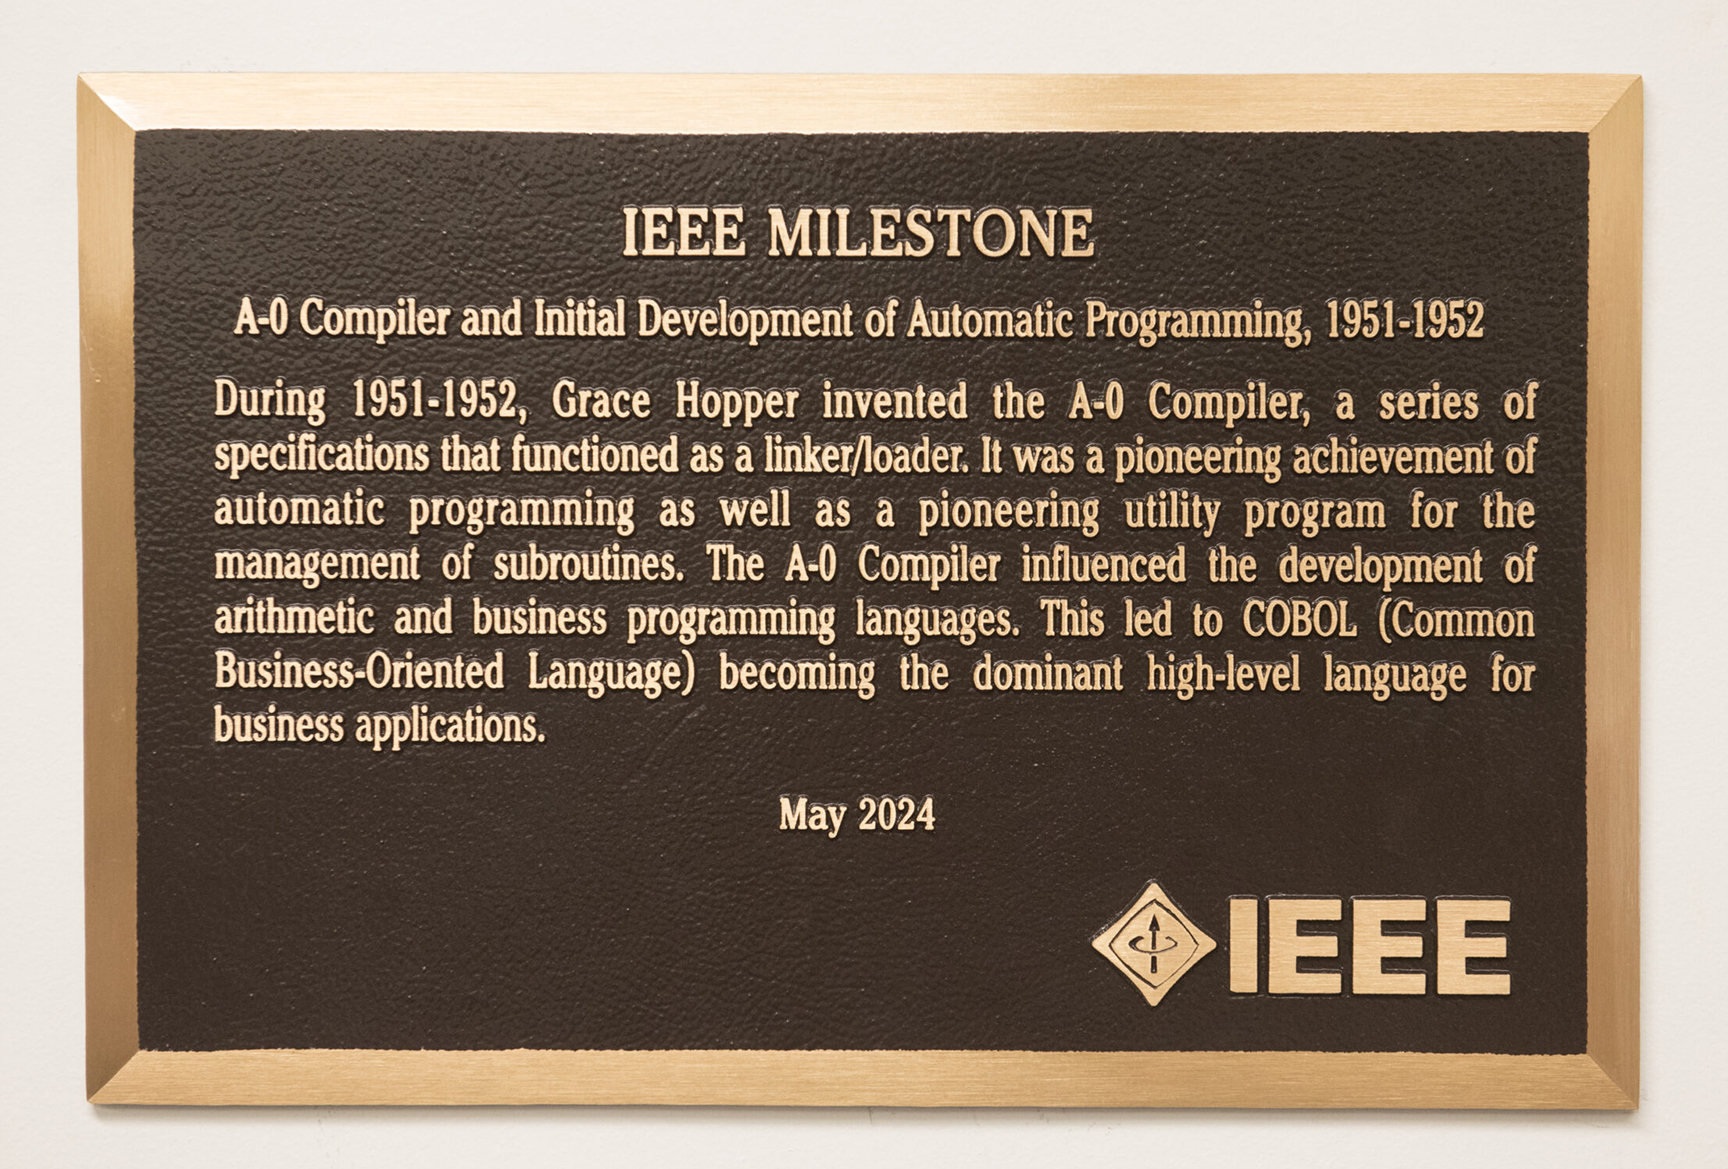 An IEEE MILESTONE plaque commemorating Grace Hopper